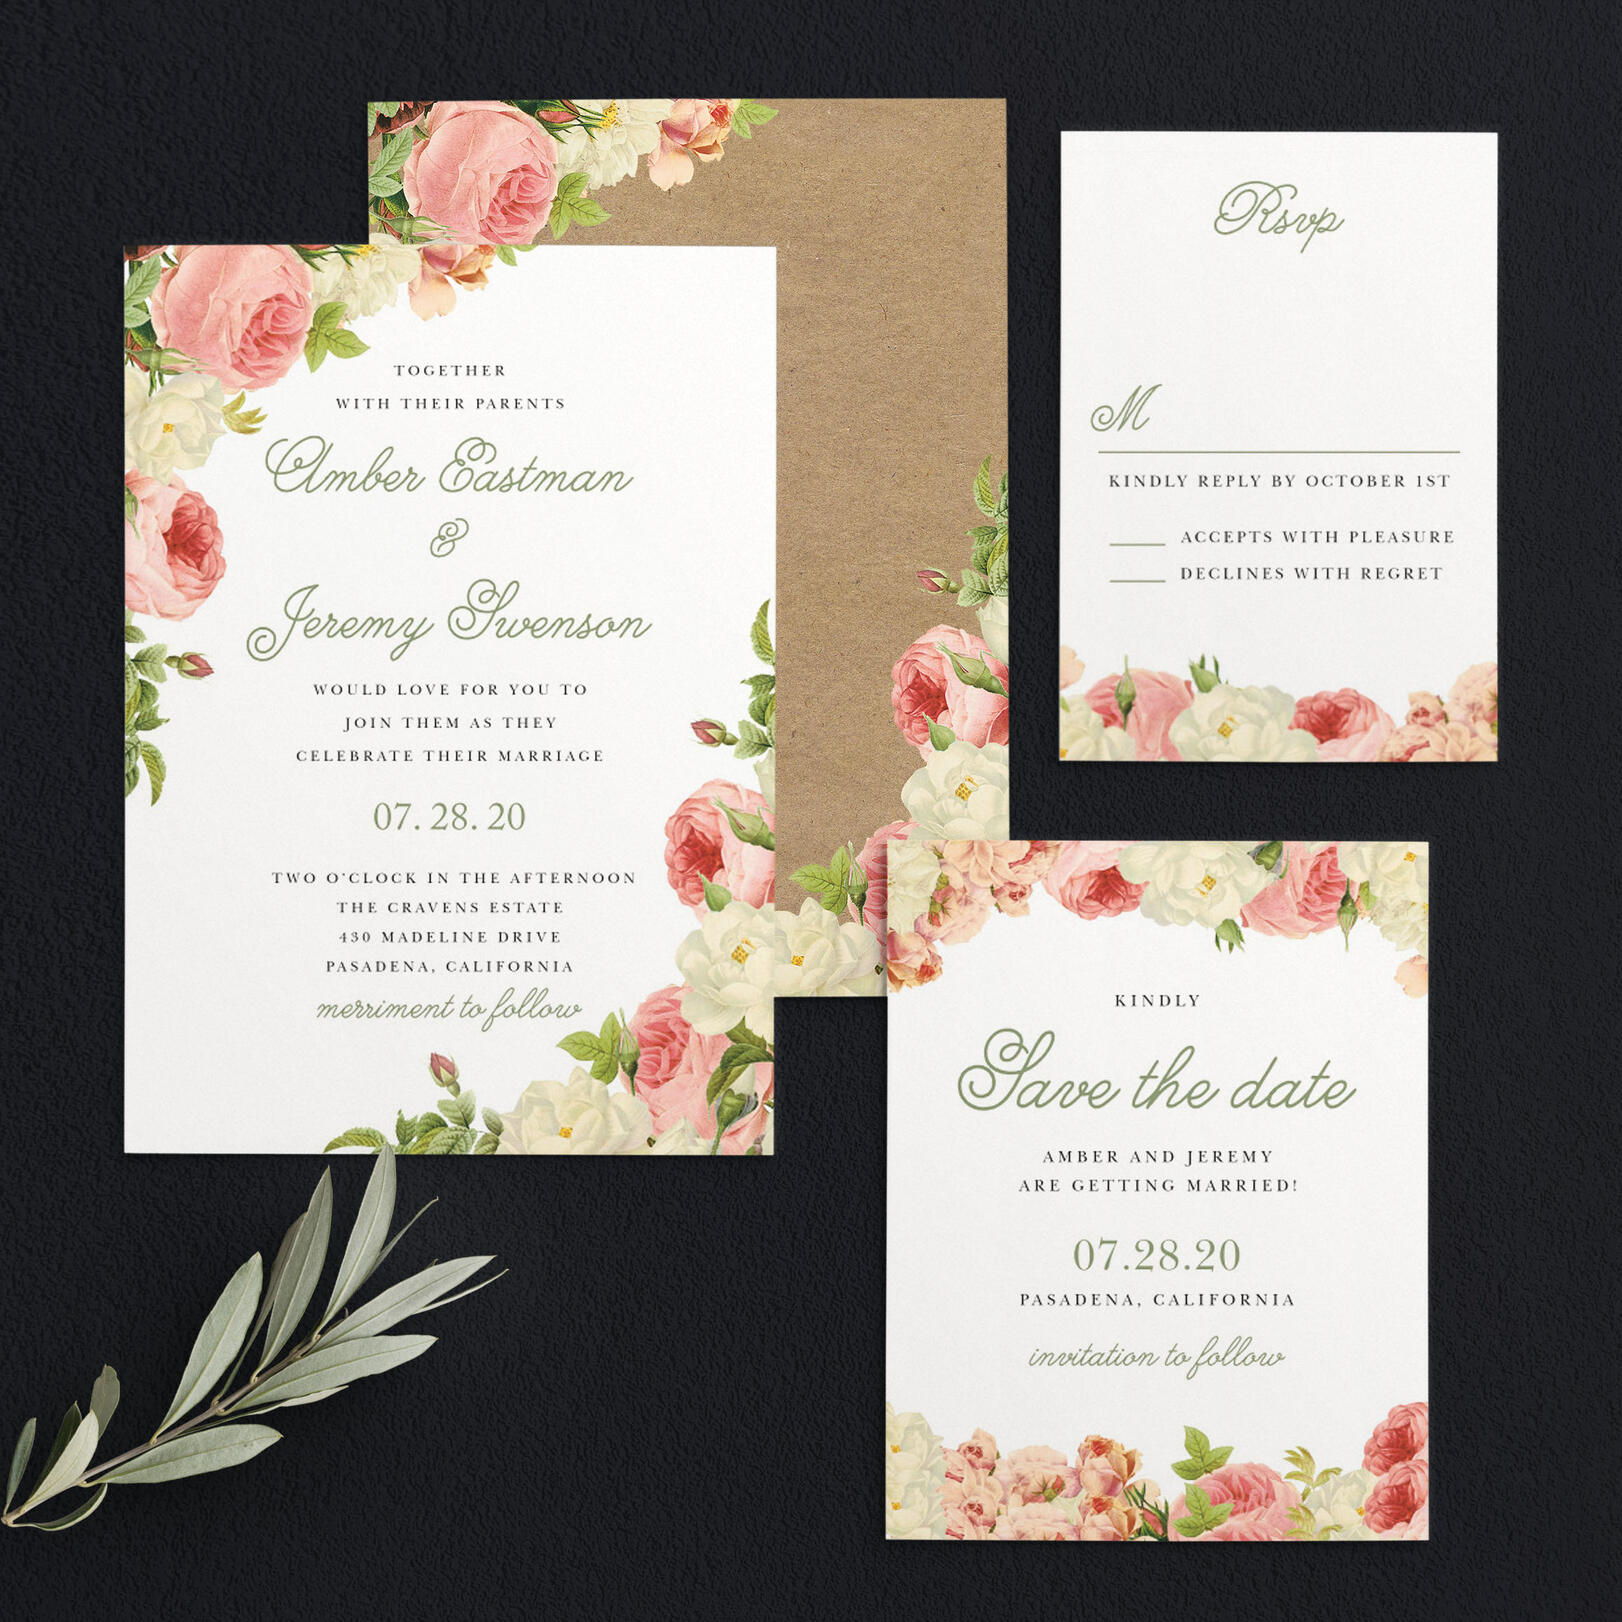 Blooming Monogram Wedding Invitations by Basic Invite